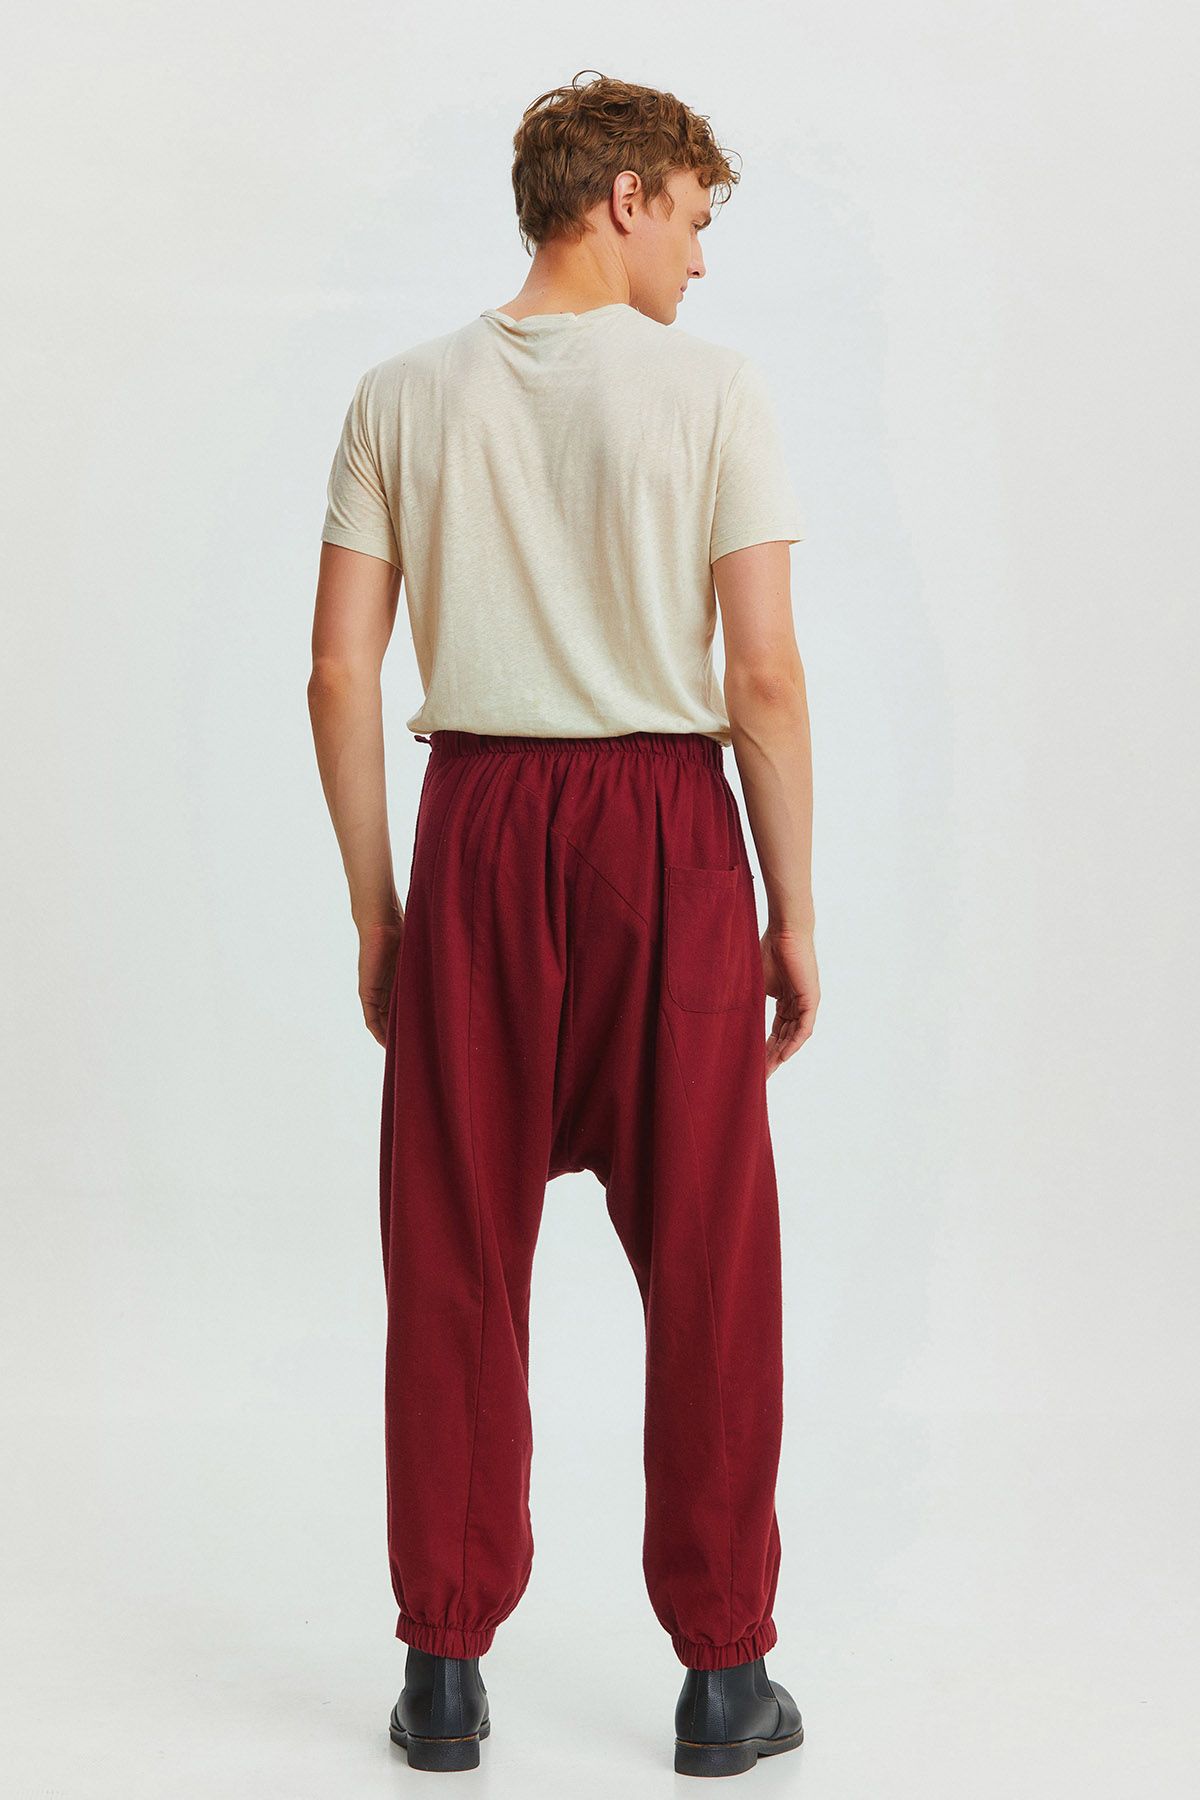 Elastic Cuff Men's Winter Harem Pants with Pocket Dark Red